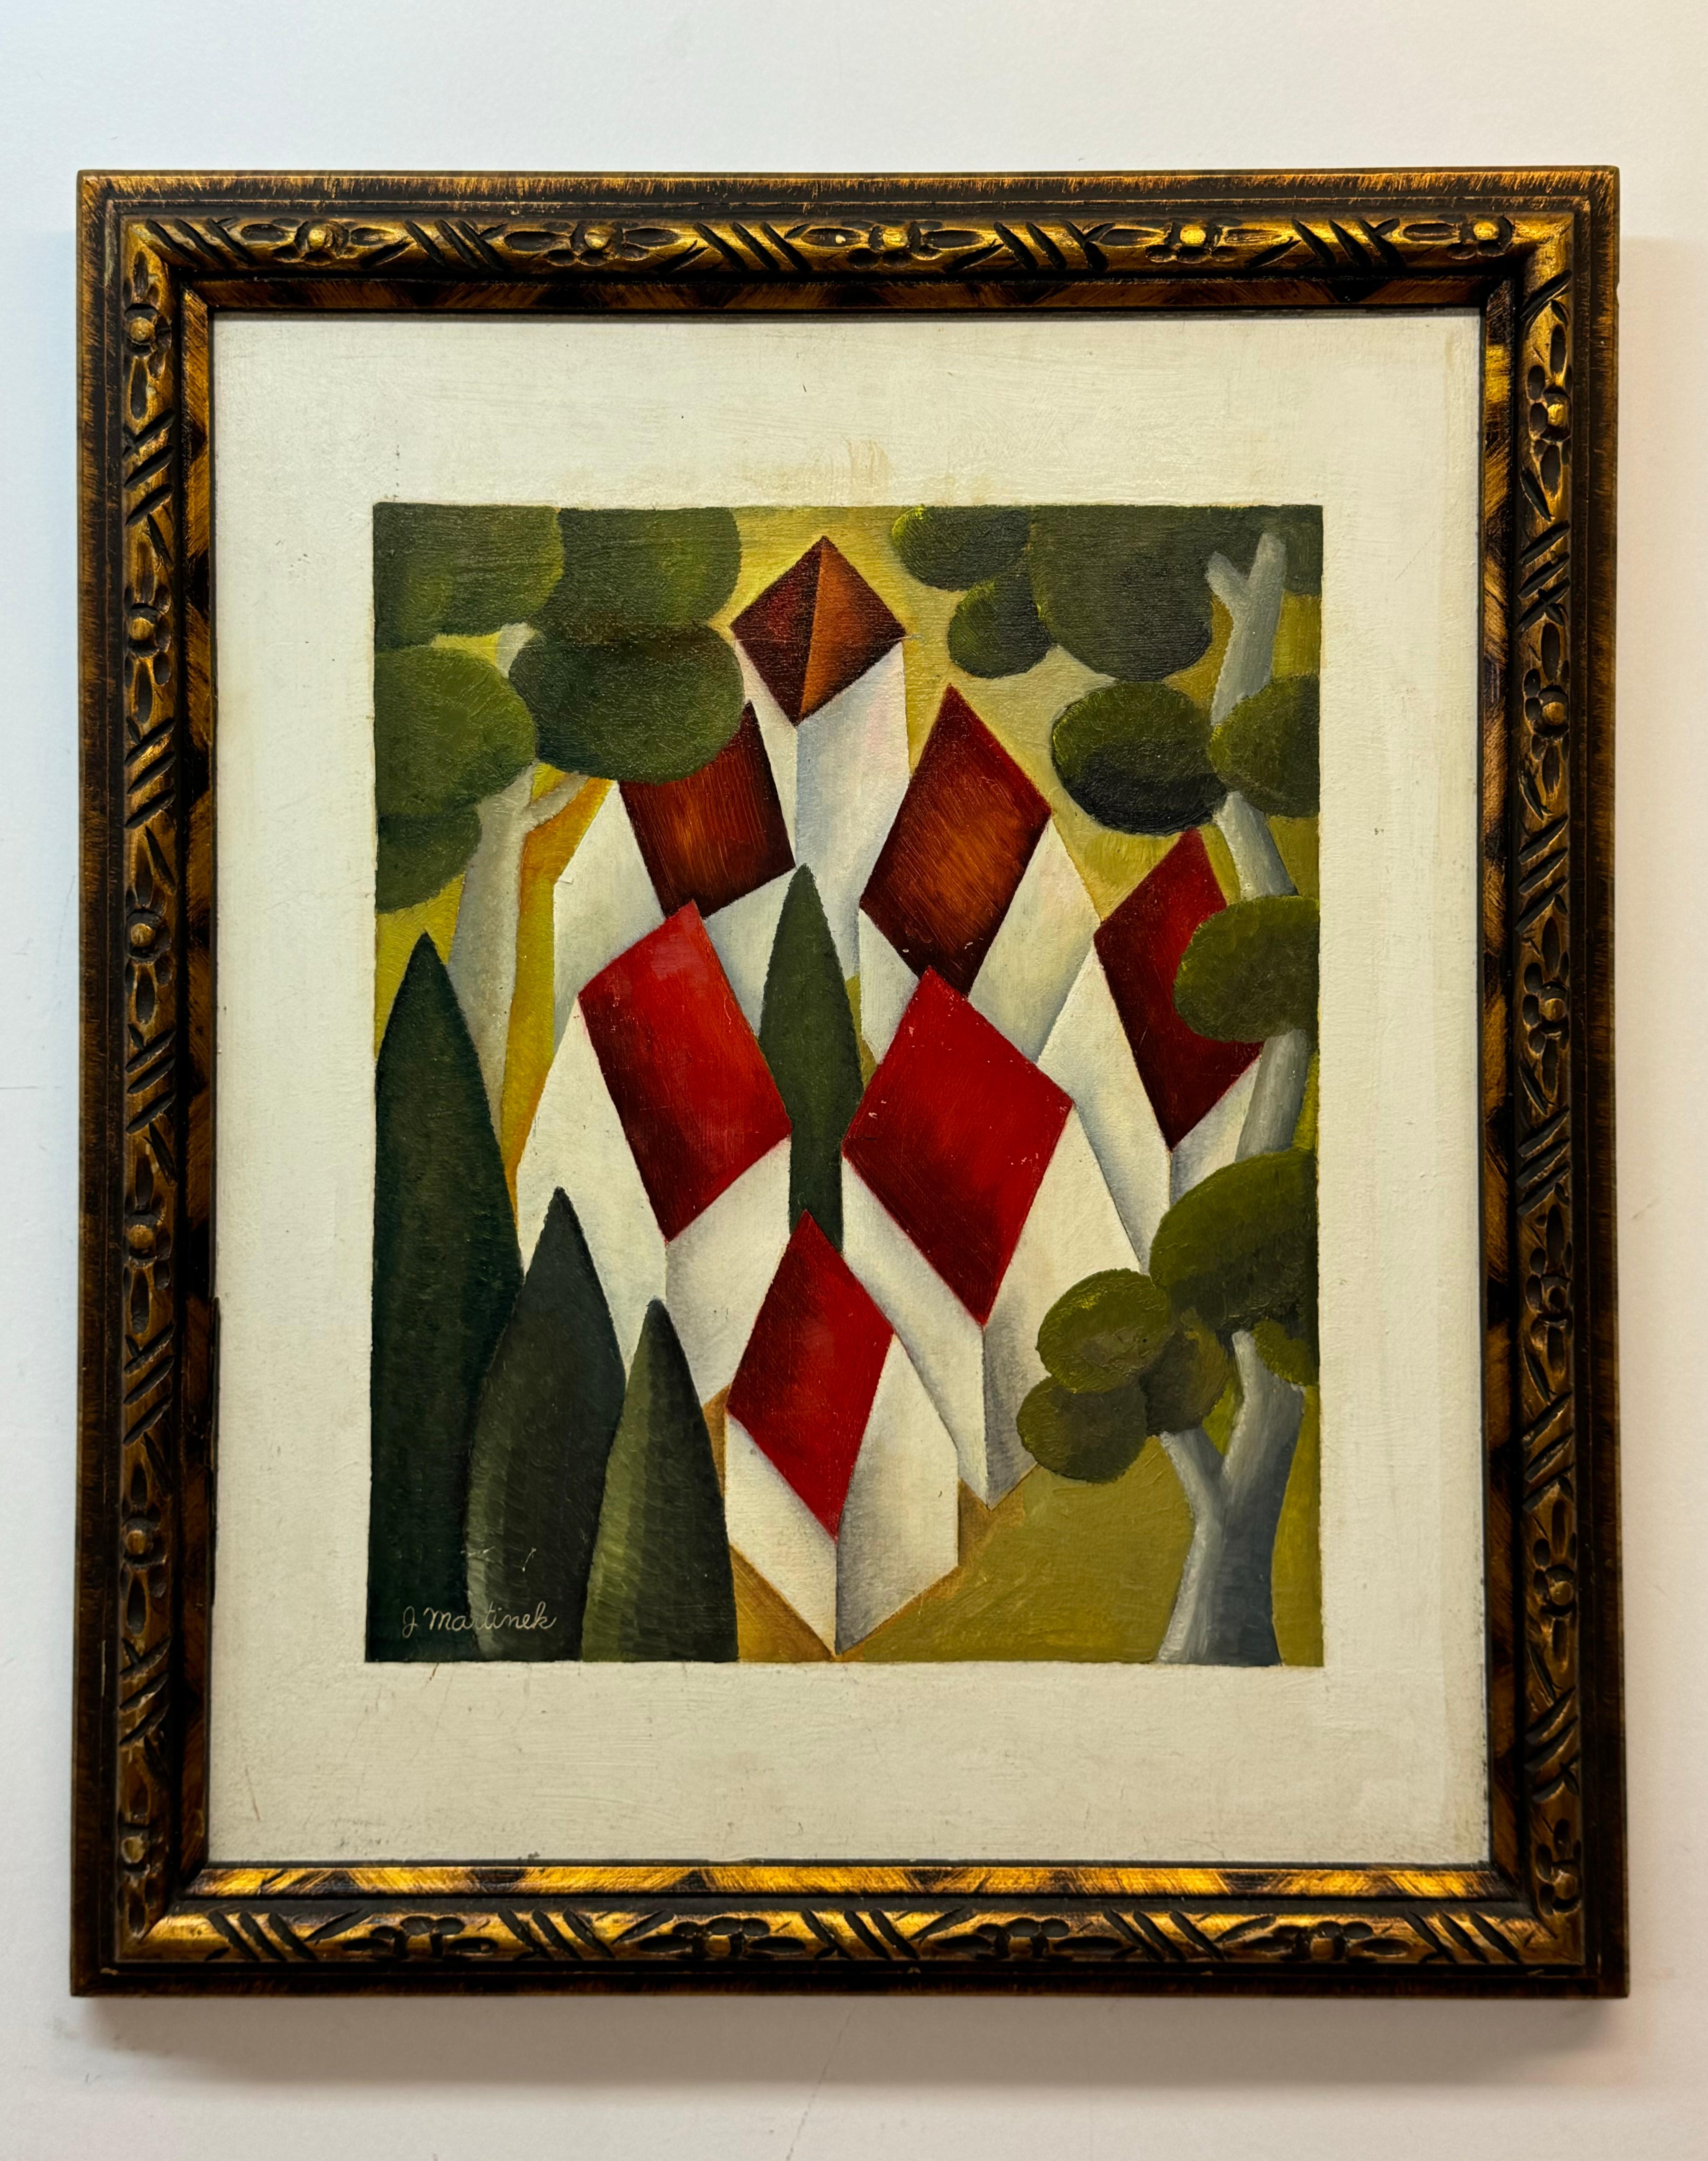 Joseph Martinek (American/check, 1915-1989). Cubist style landscape of trees and houses. Oil on Masonite. 16 x 20 unframed, 22.75 x 26.75 framed